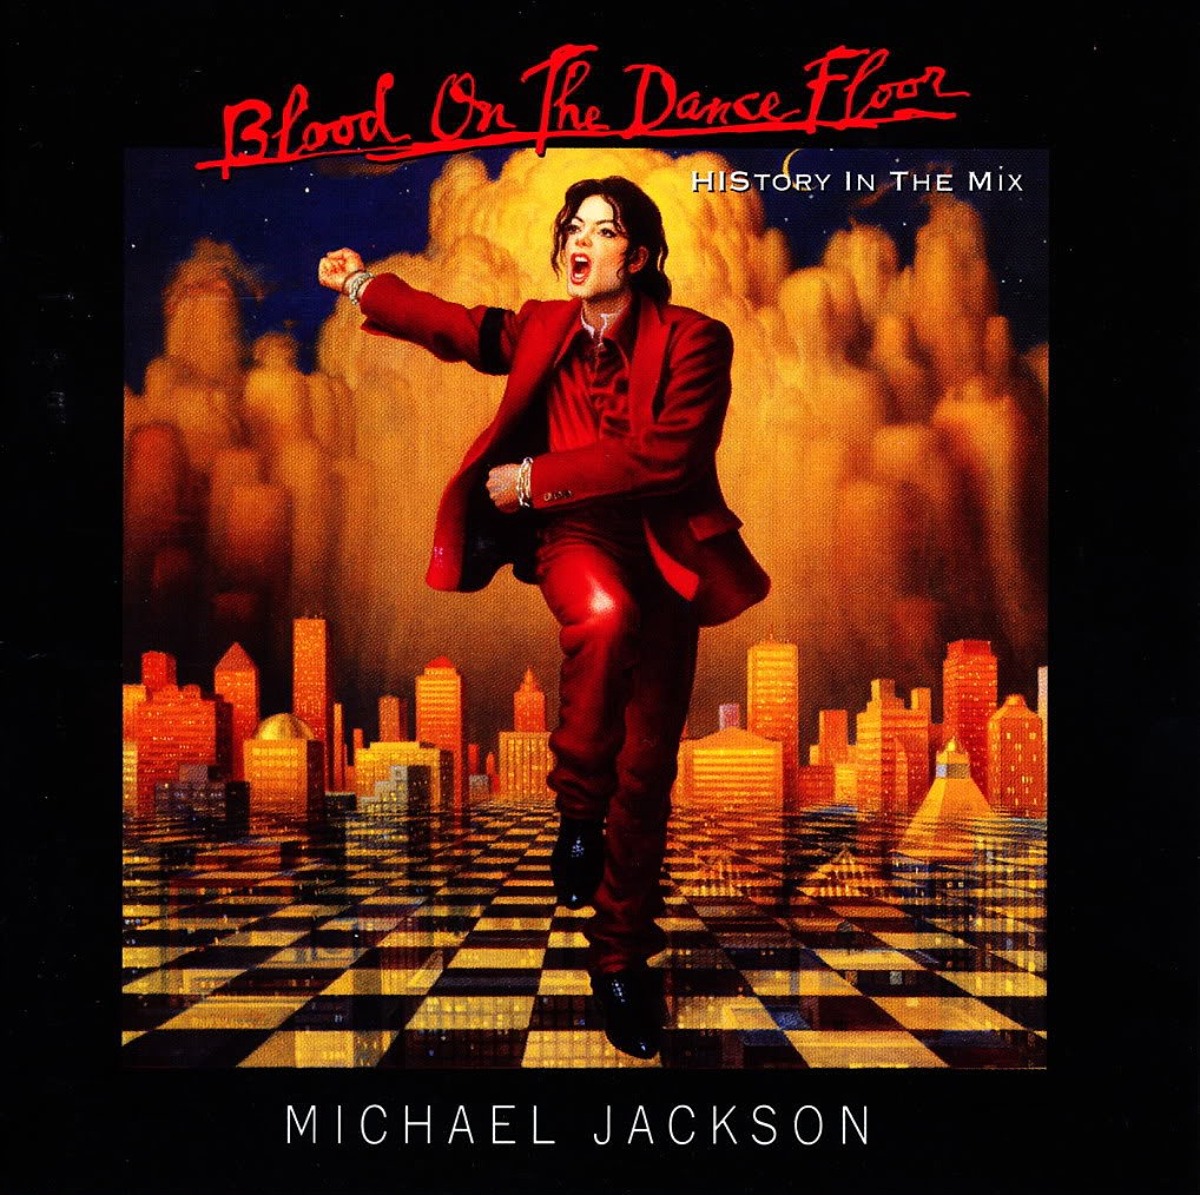 Portada del álbum 'Blood on the Dance Floor' de Michael Jackson